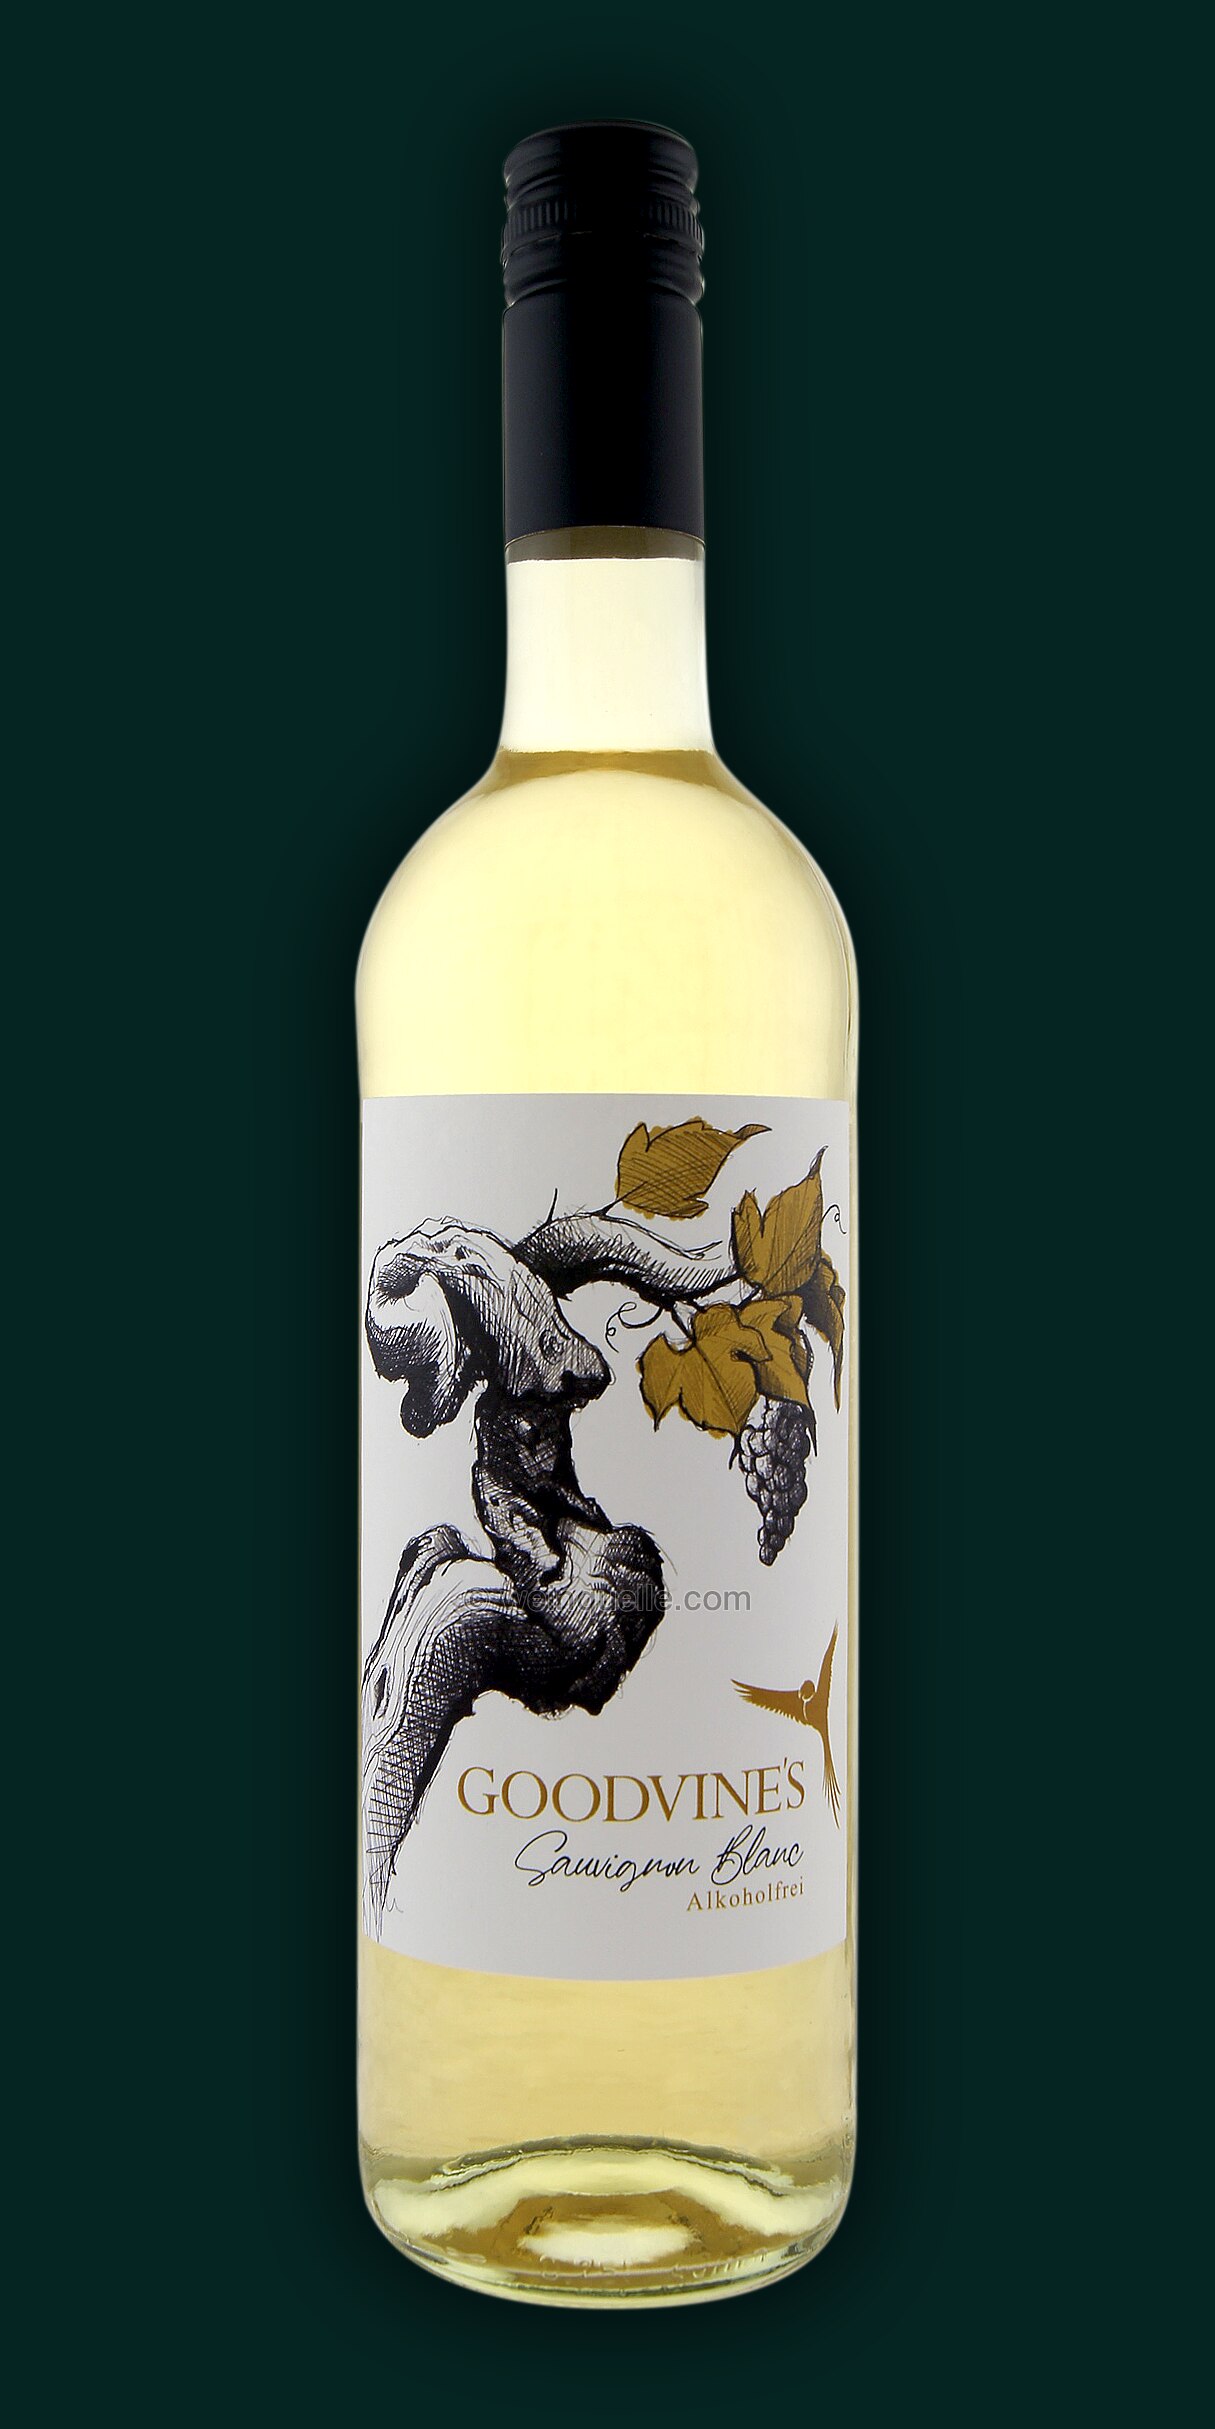 Goodvine\'s Sauvignon Blanc Alkoholfrei, Weinquelle € 9,75 - Lühmann